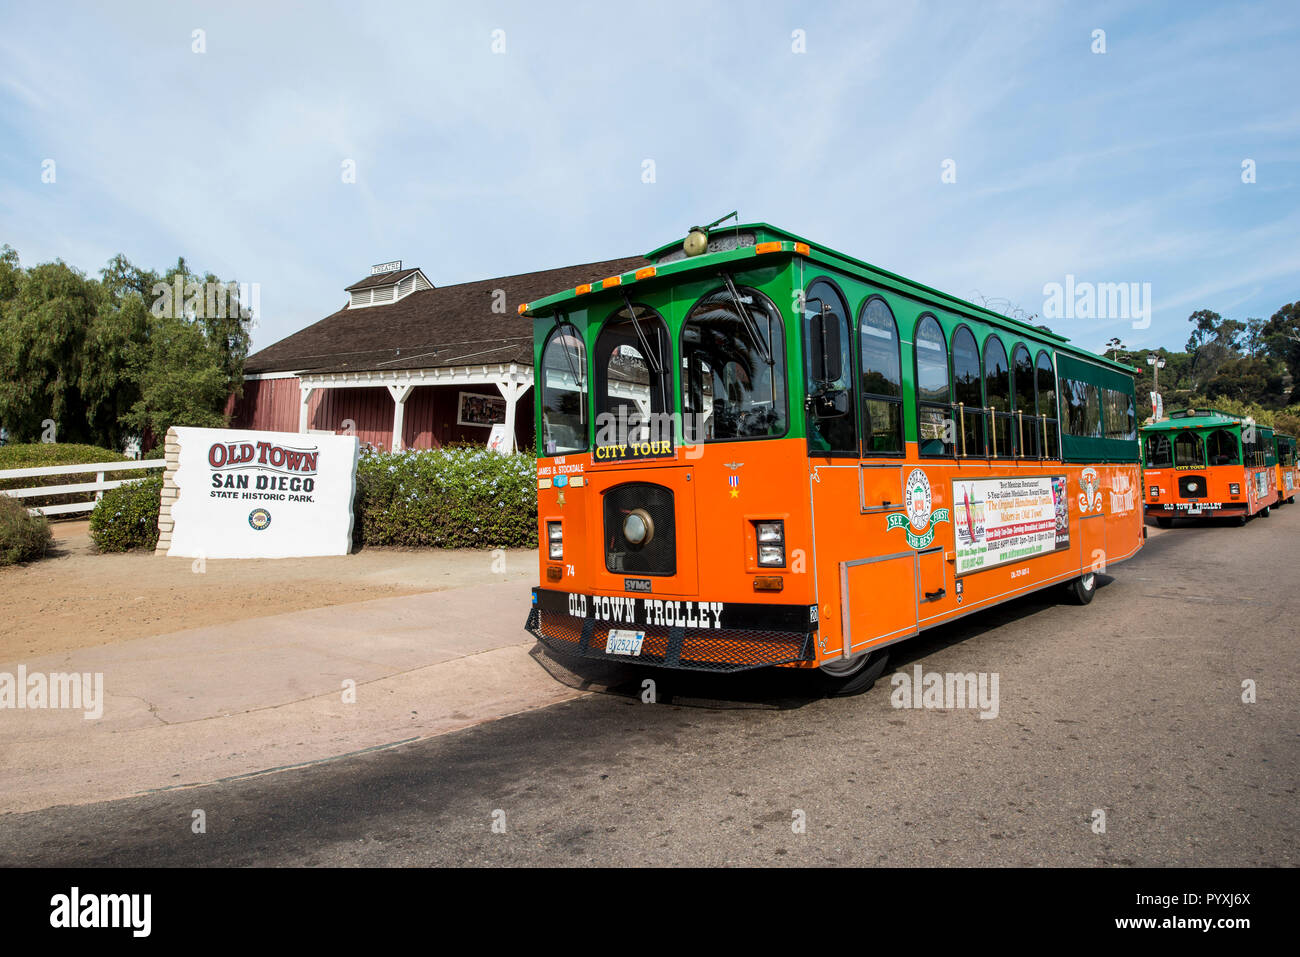 City Tour Trolley Old Town, San Diego, Californie. Banque D'Images